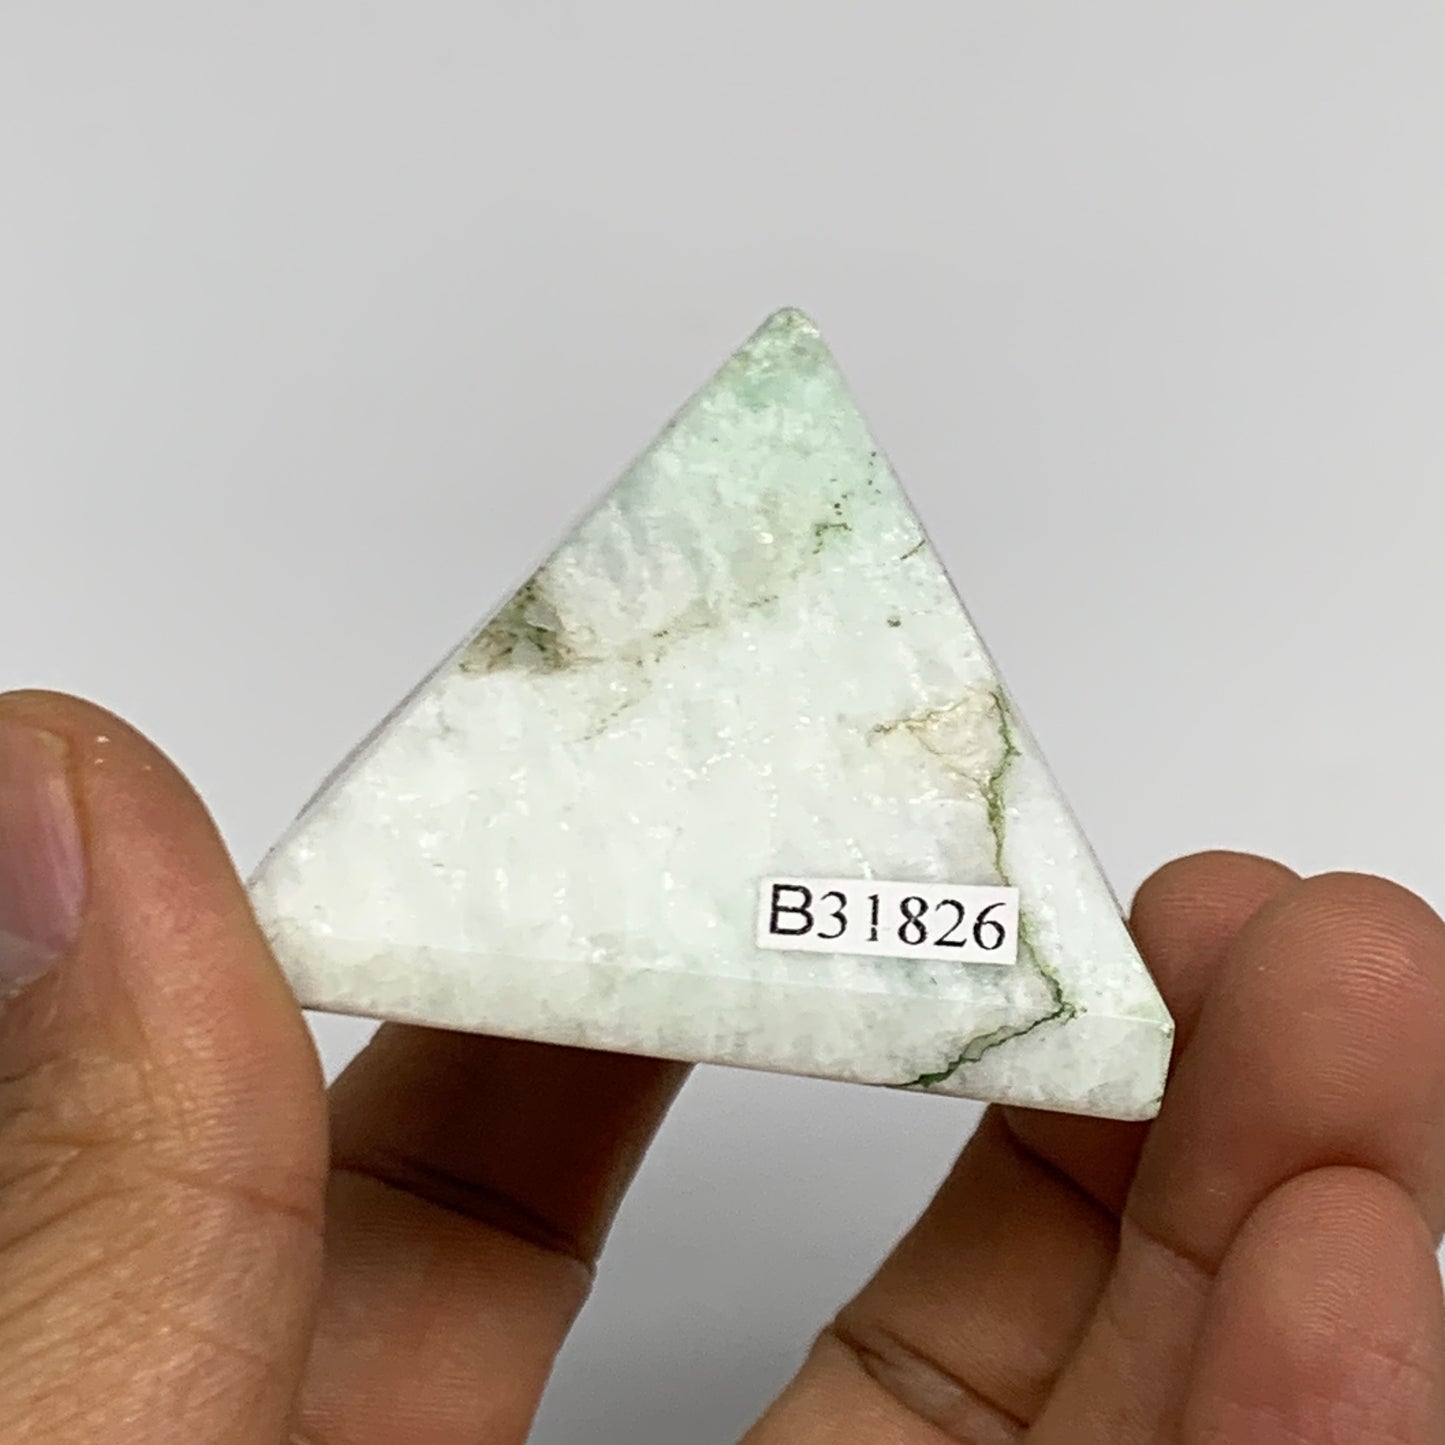 86.1g, 1.4"x1.8"x1.8", Amazonite Pyramid Gemstone, Decorative Stone, B31826